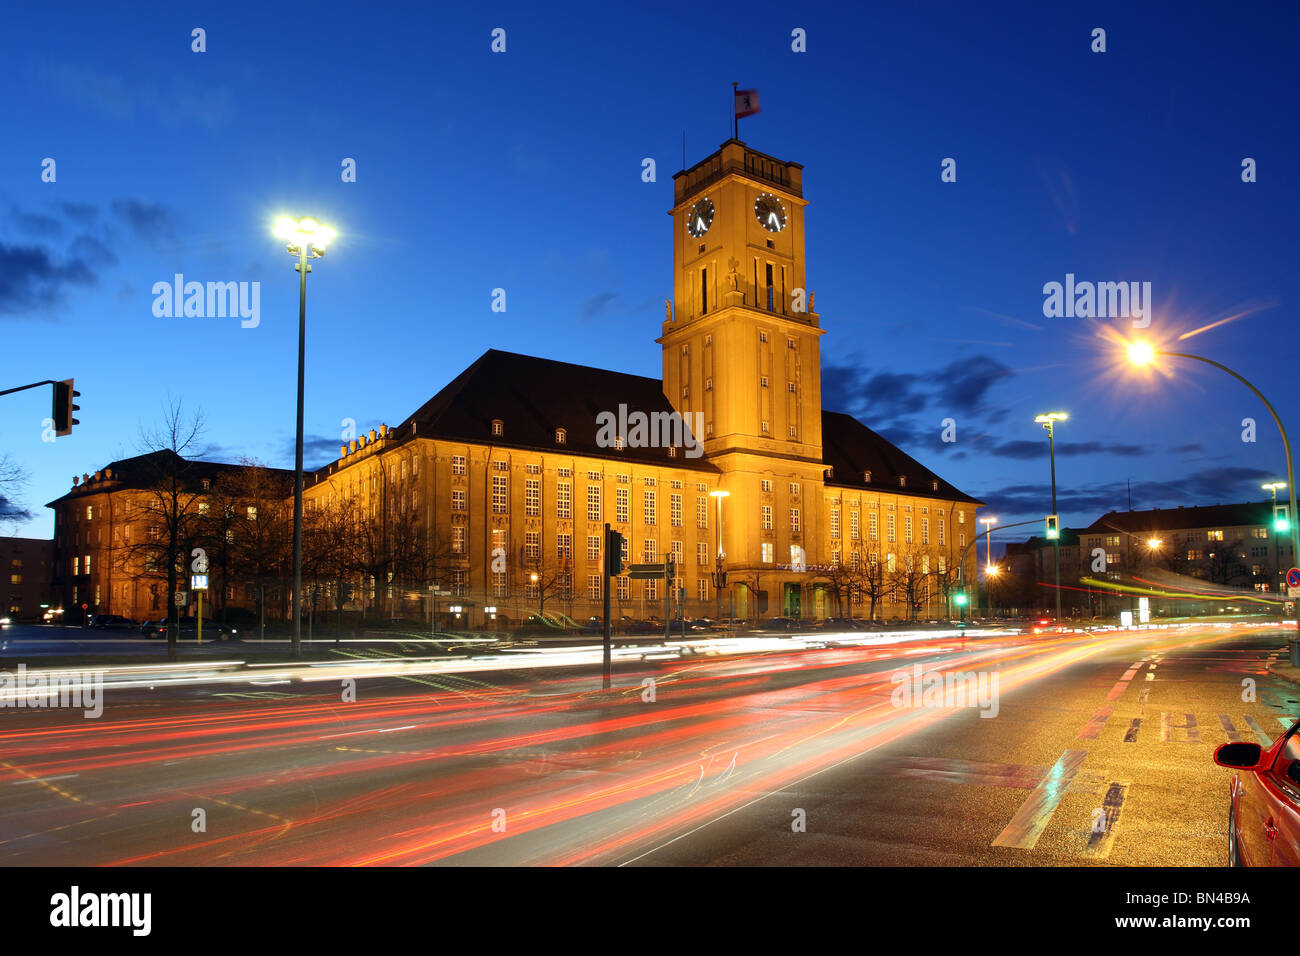 Rathaus Schoeneberg in the evening, Berlin, Germany Stock Photo